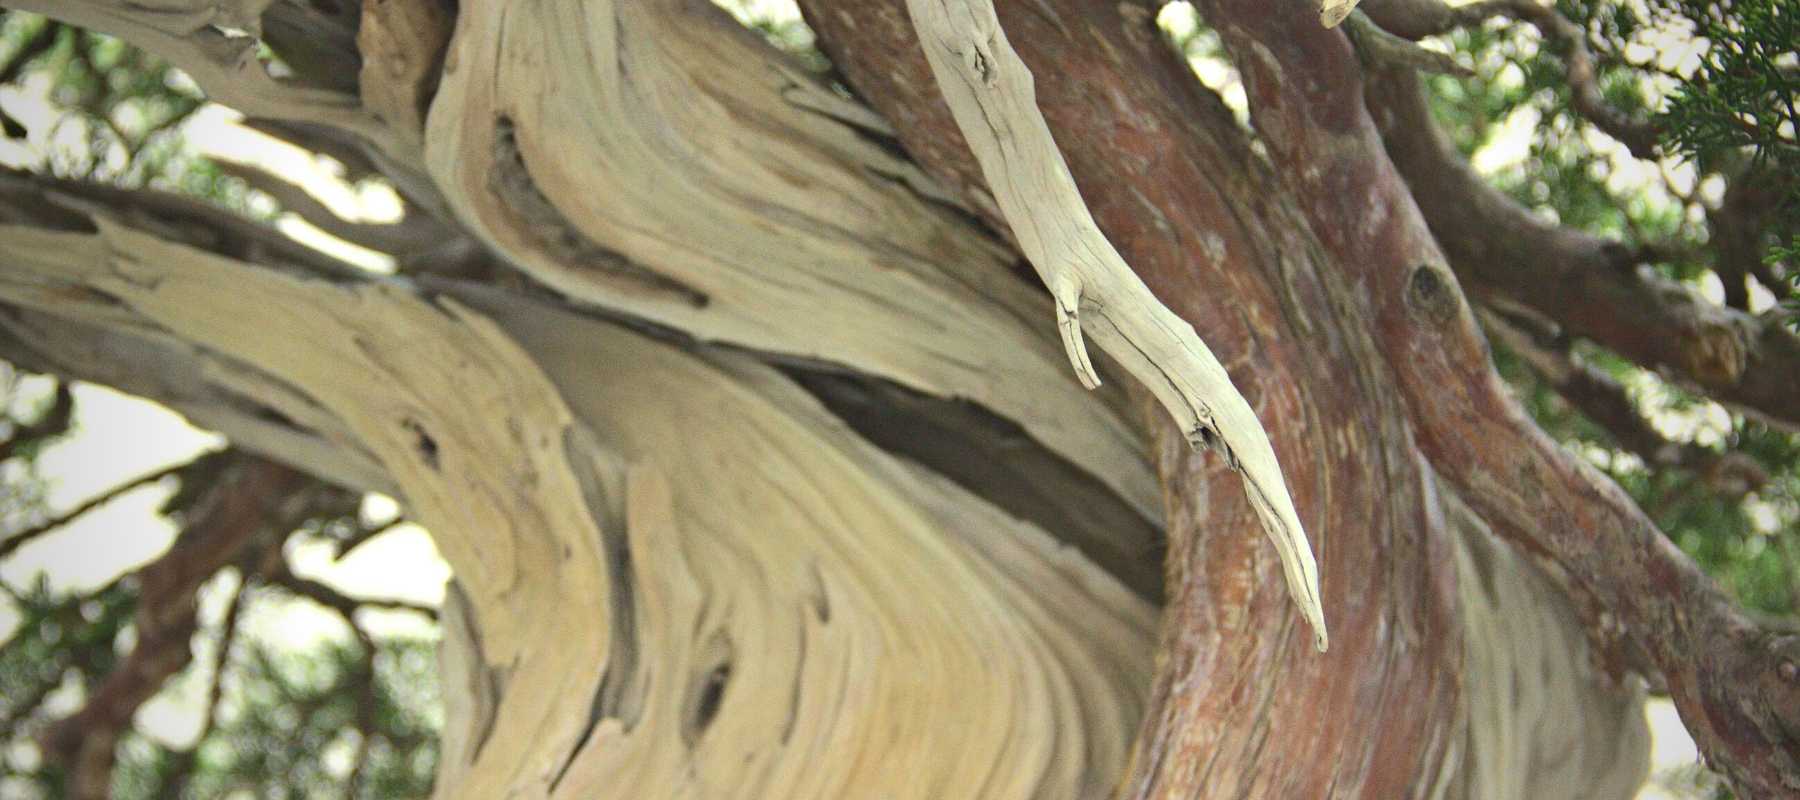 samurai deadwood carving bits for bonsai